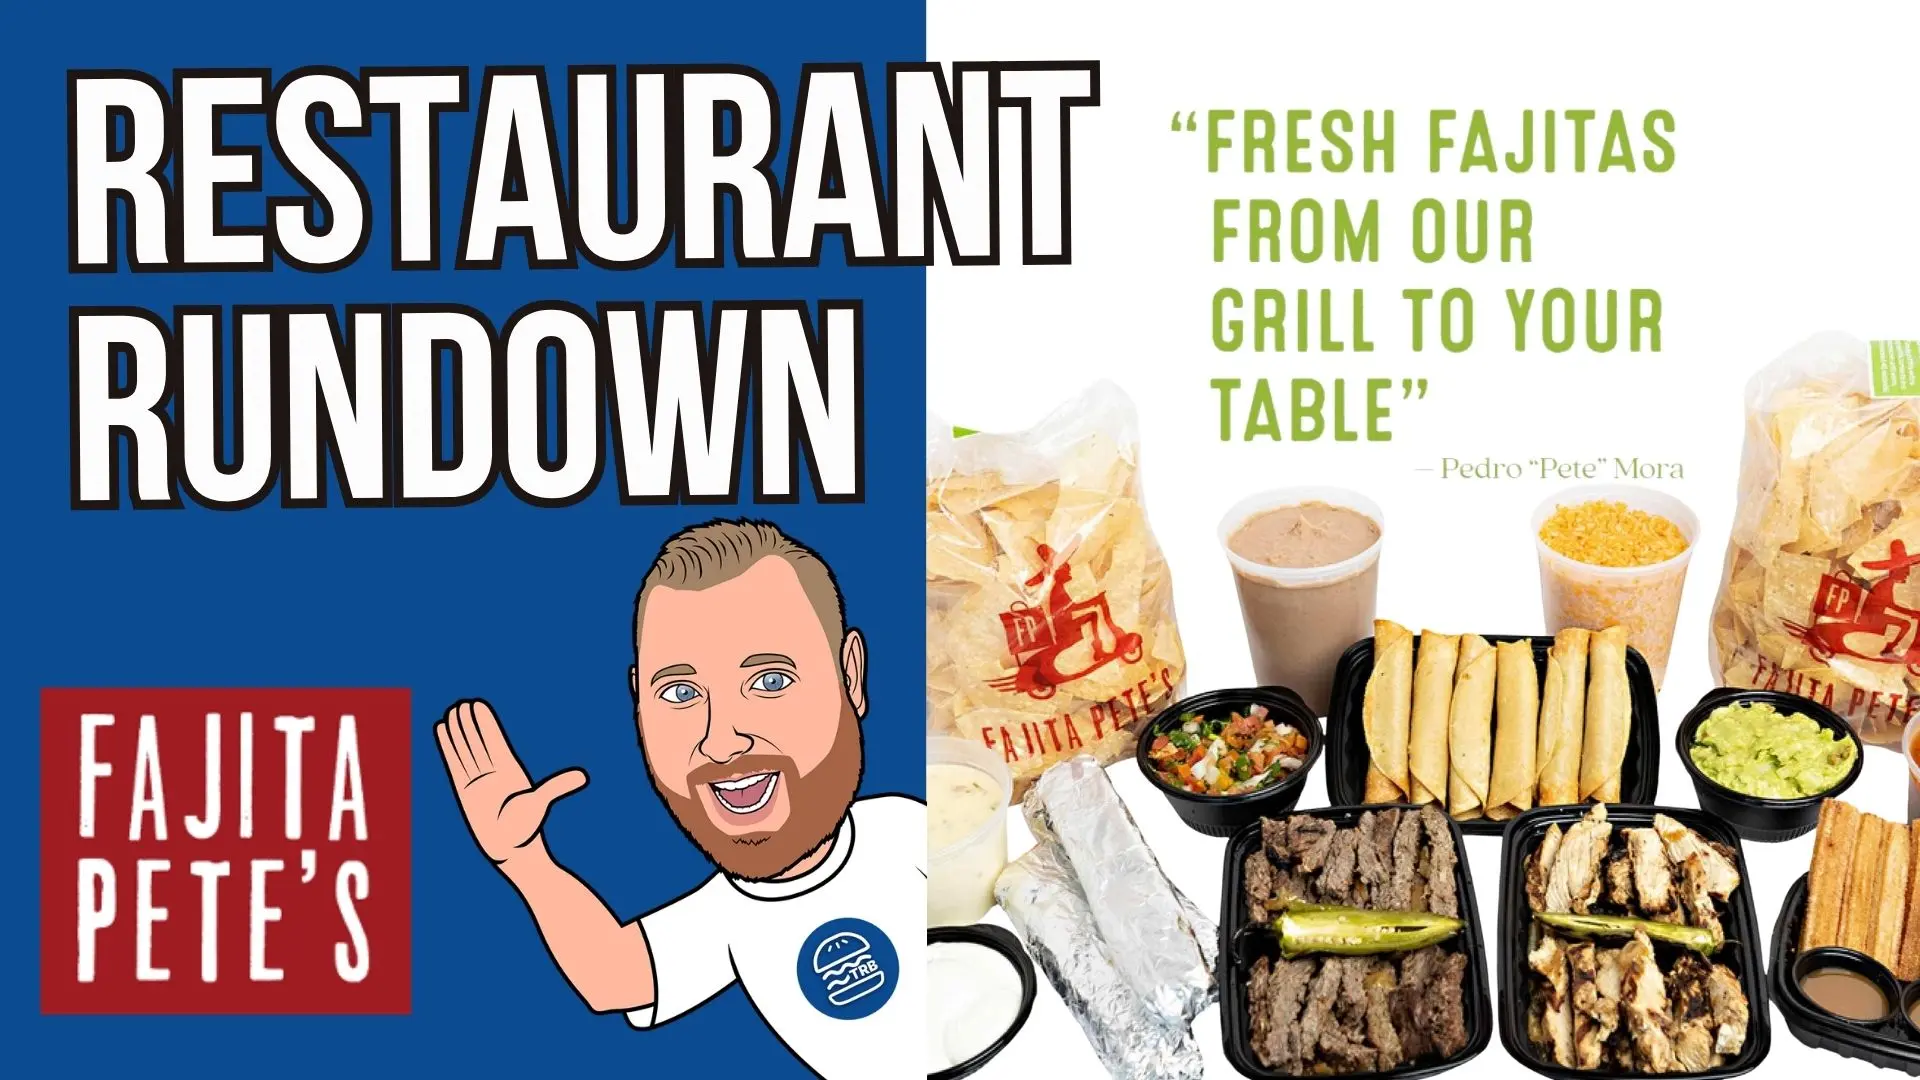 Restaurant Rundown: A Deep Dive Analysis of Fajita Pete’s